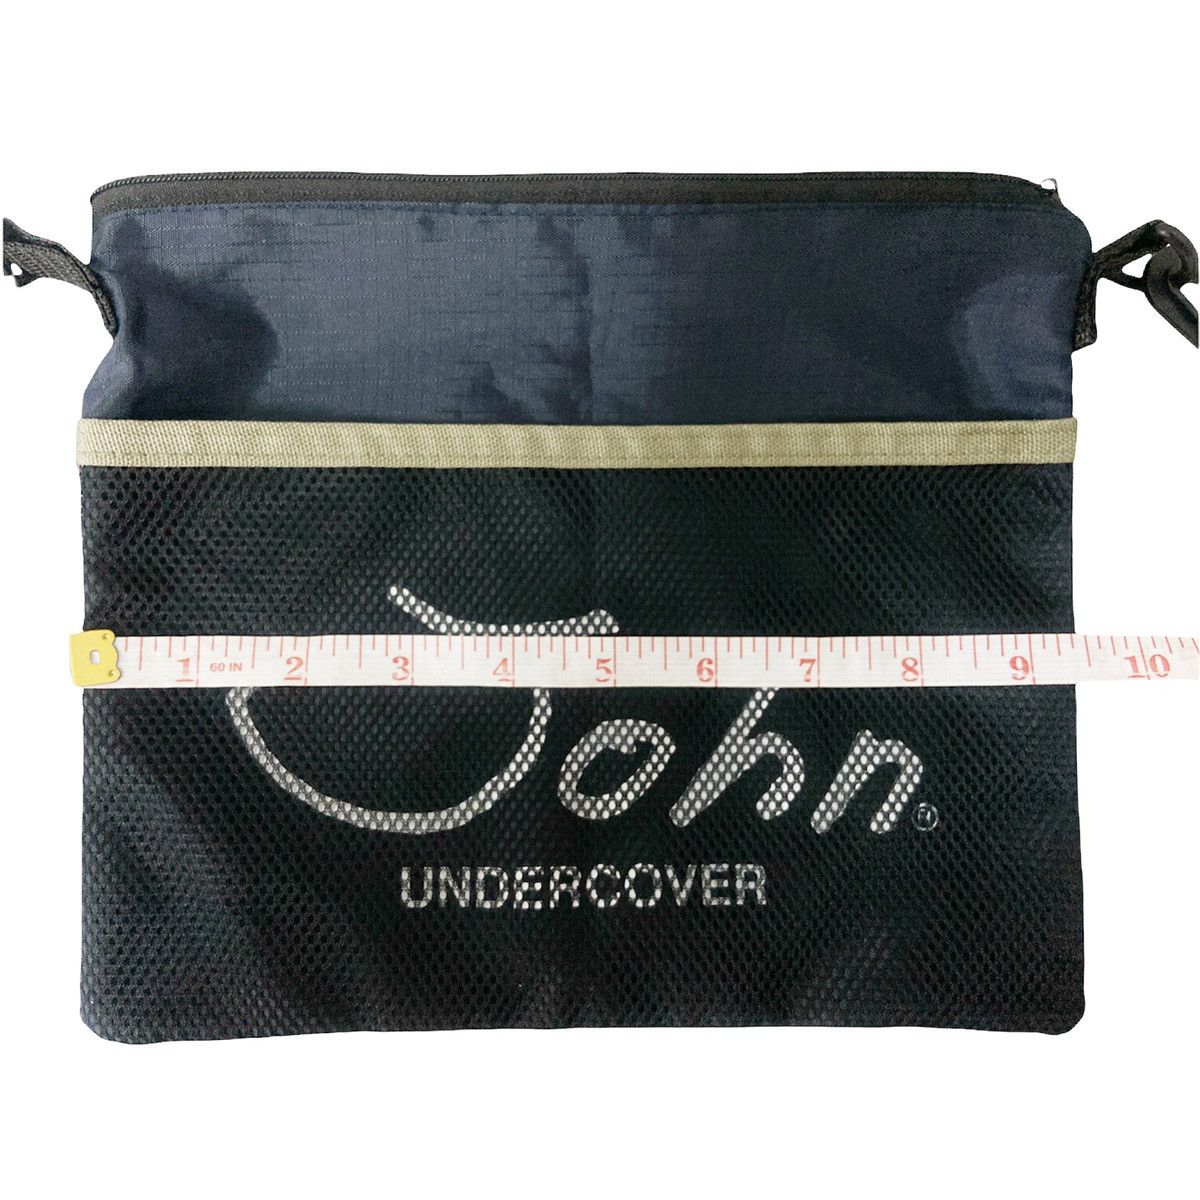 John Undercover by Jun Takahashi Sling Bag - 6